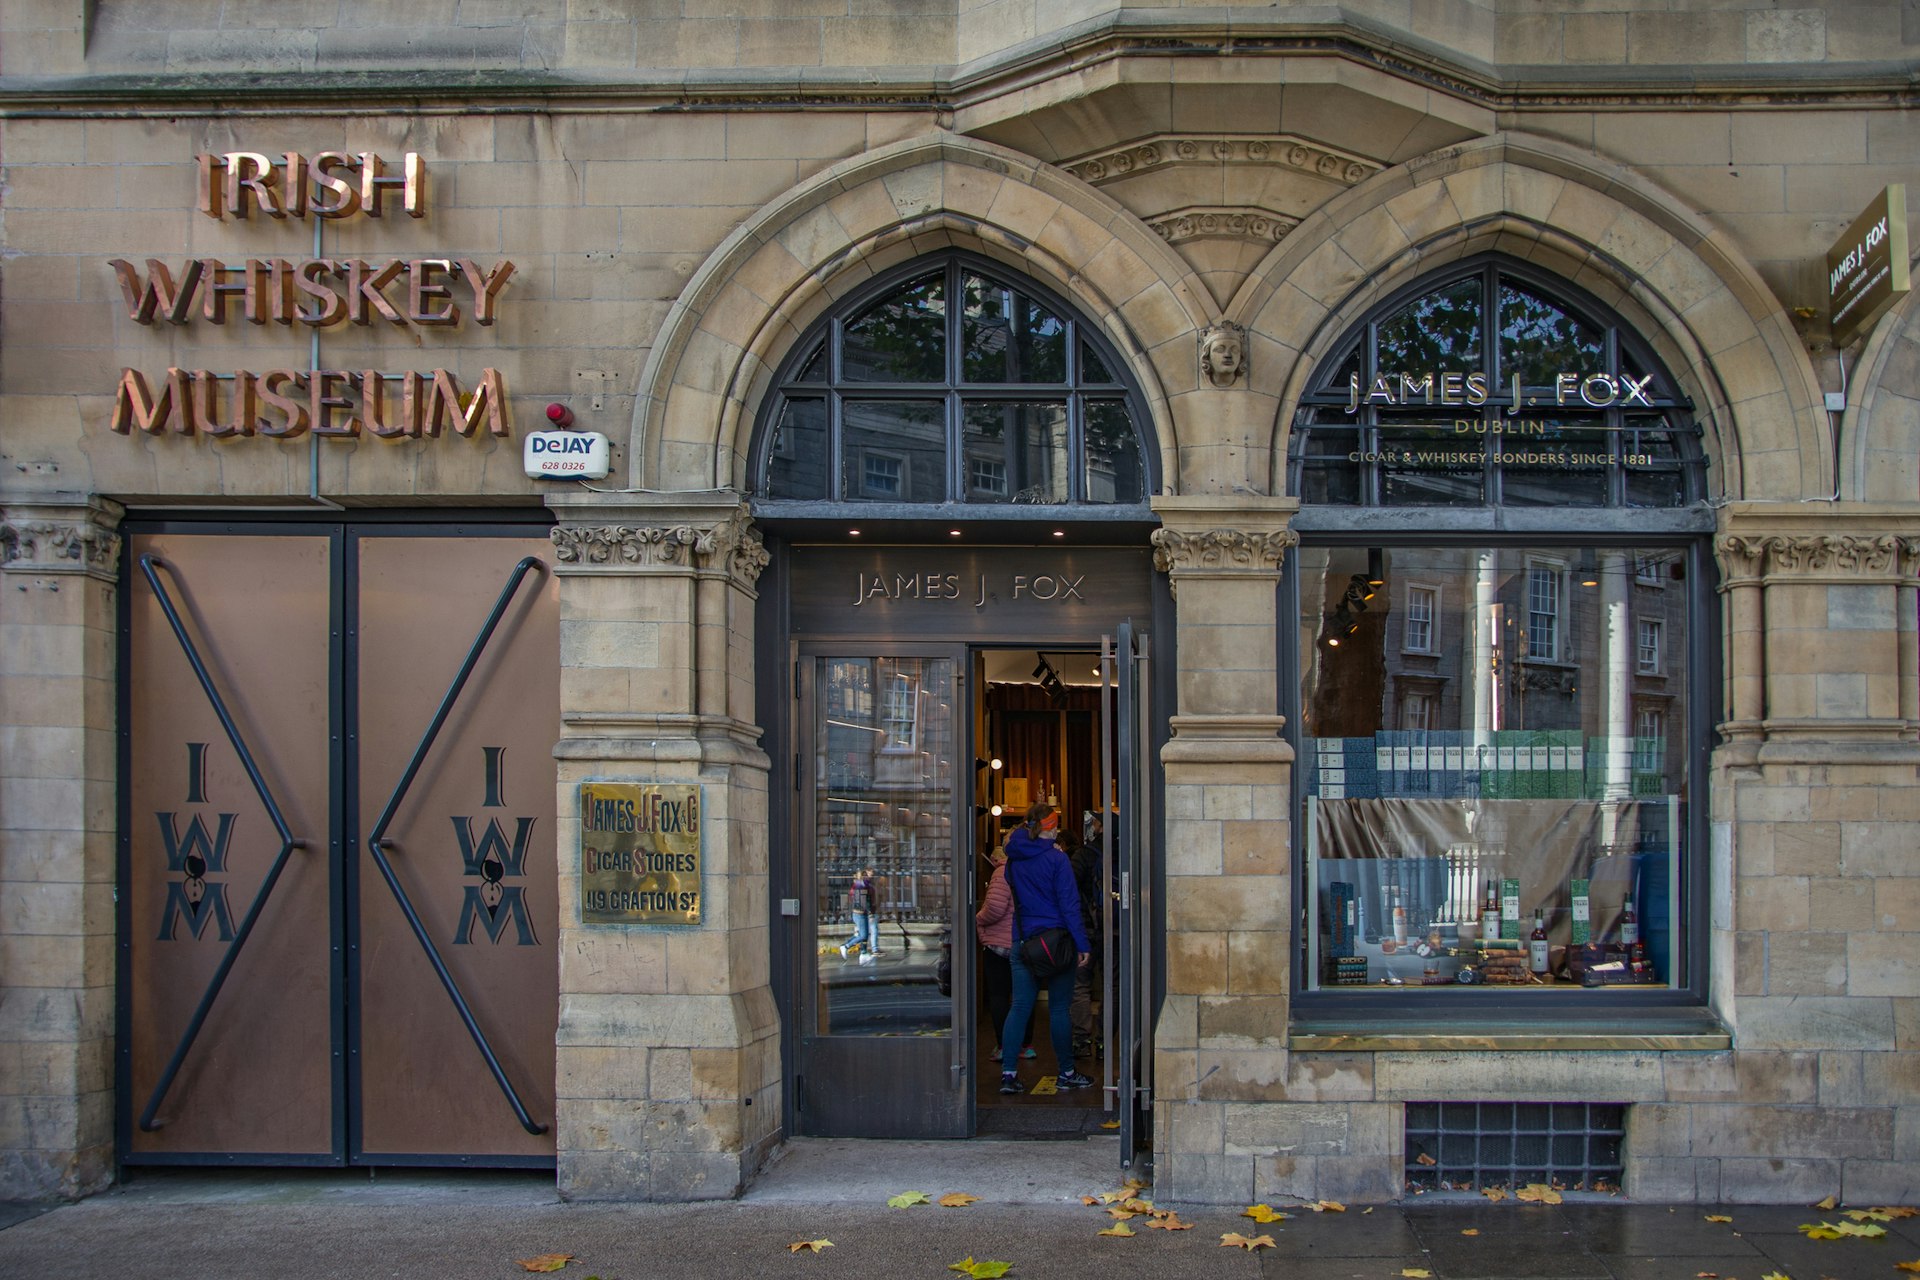 Entrance to the Irish Whiskey Museum, Dublin